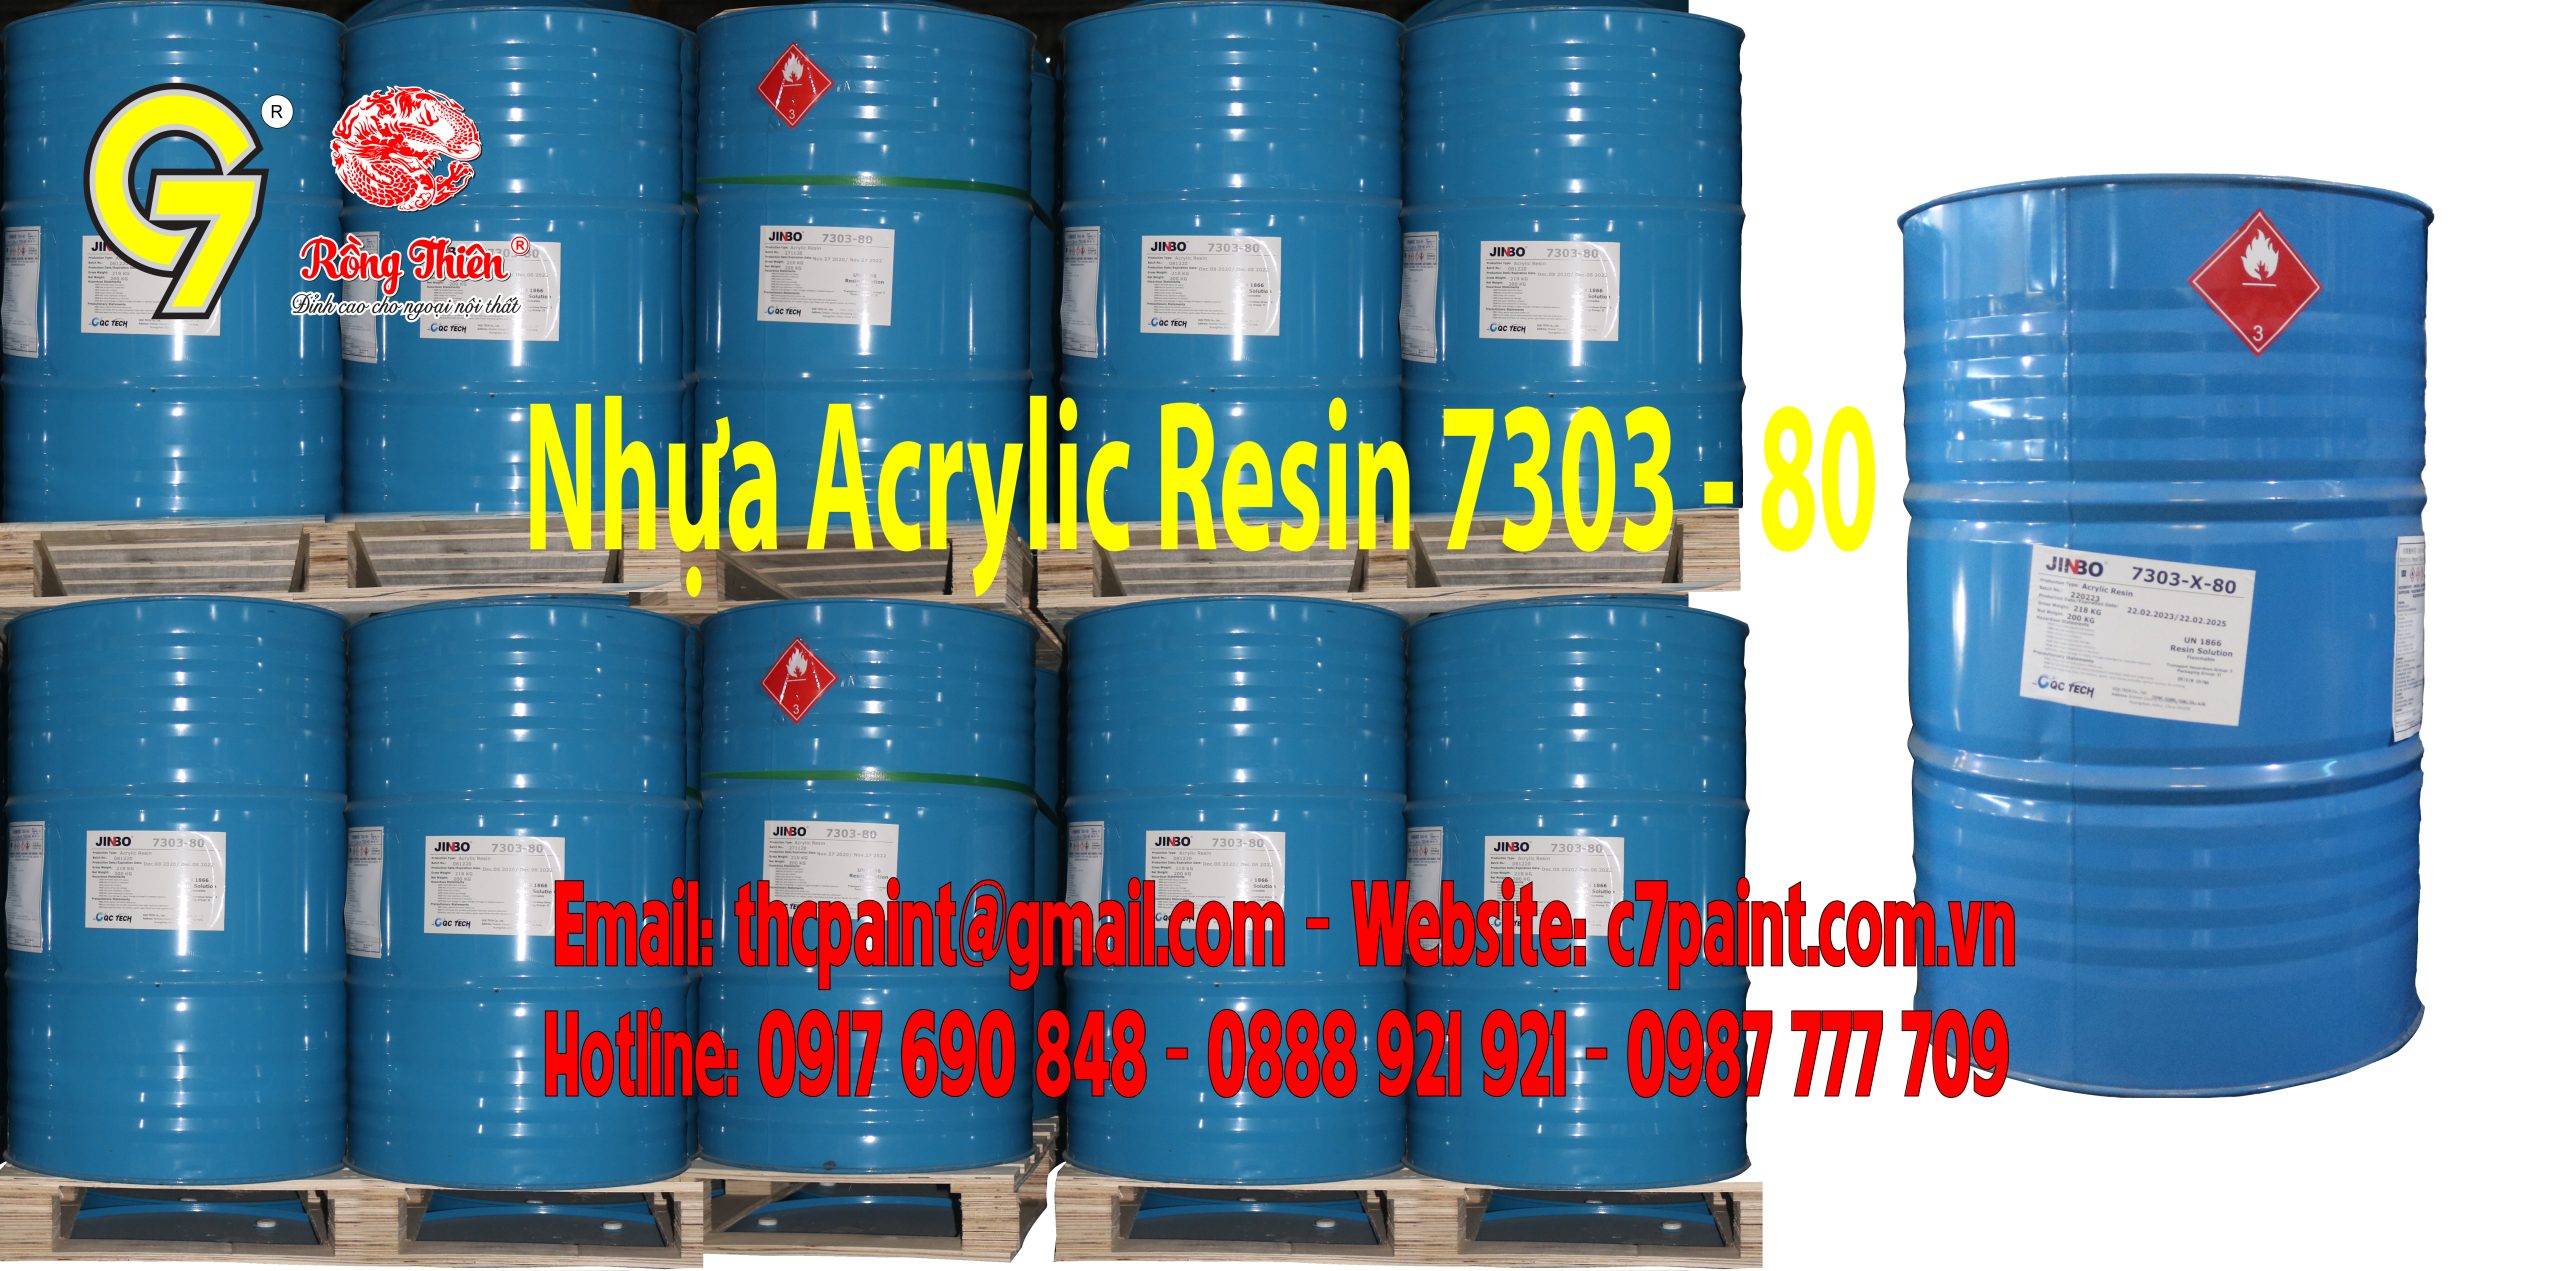 Nhựa Acrylic Resin 7303 – 80